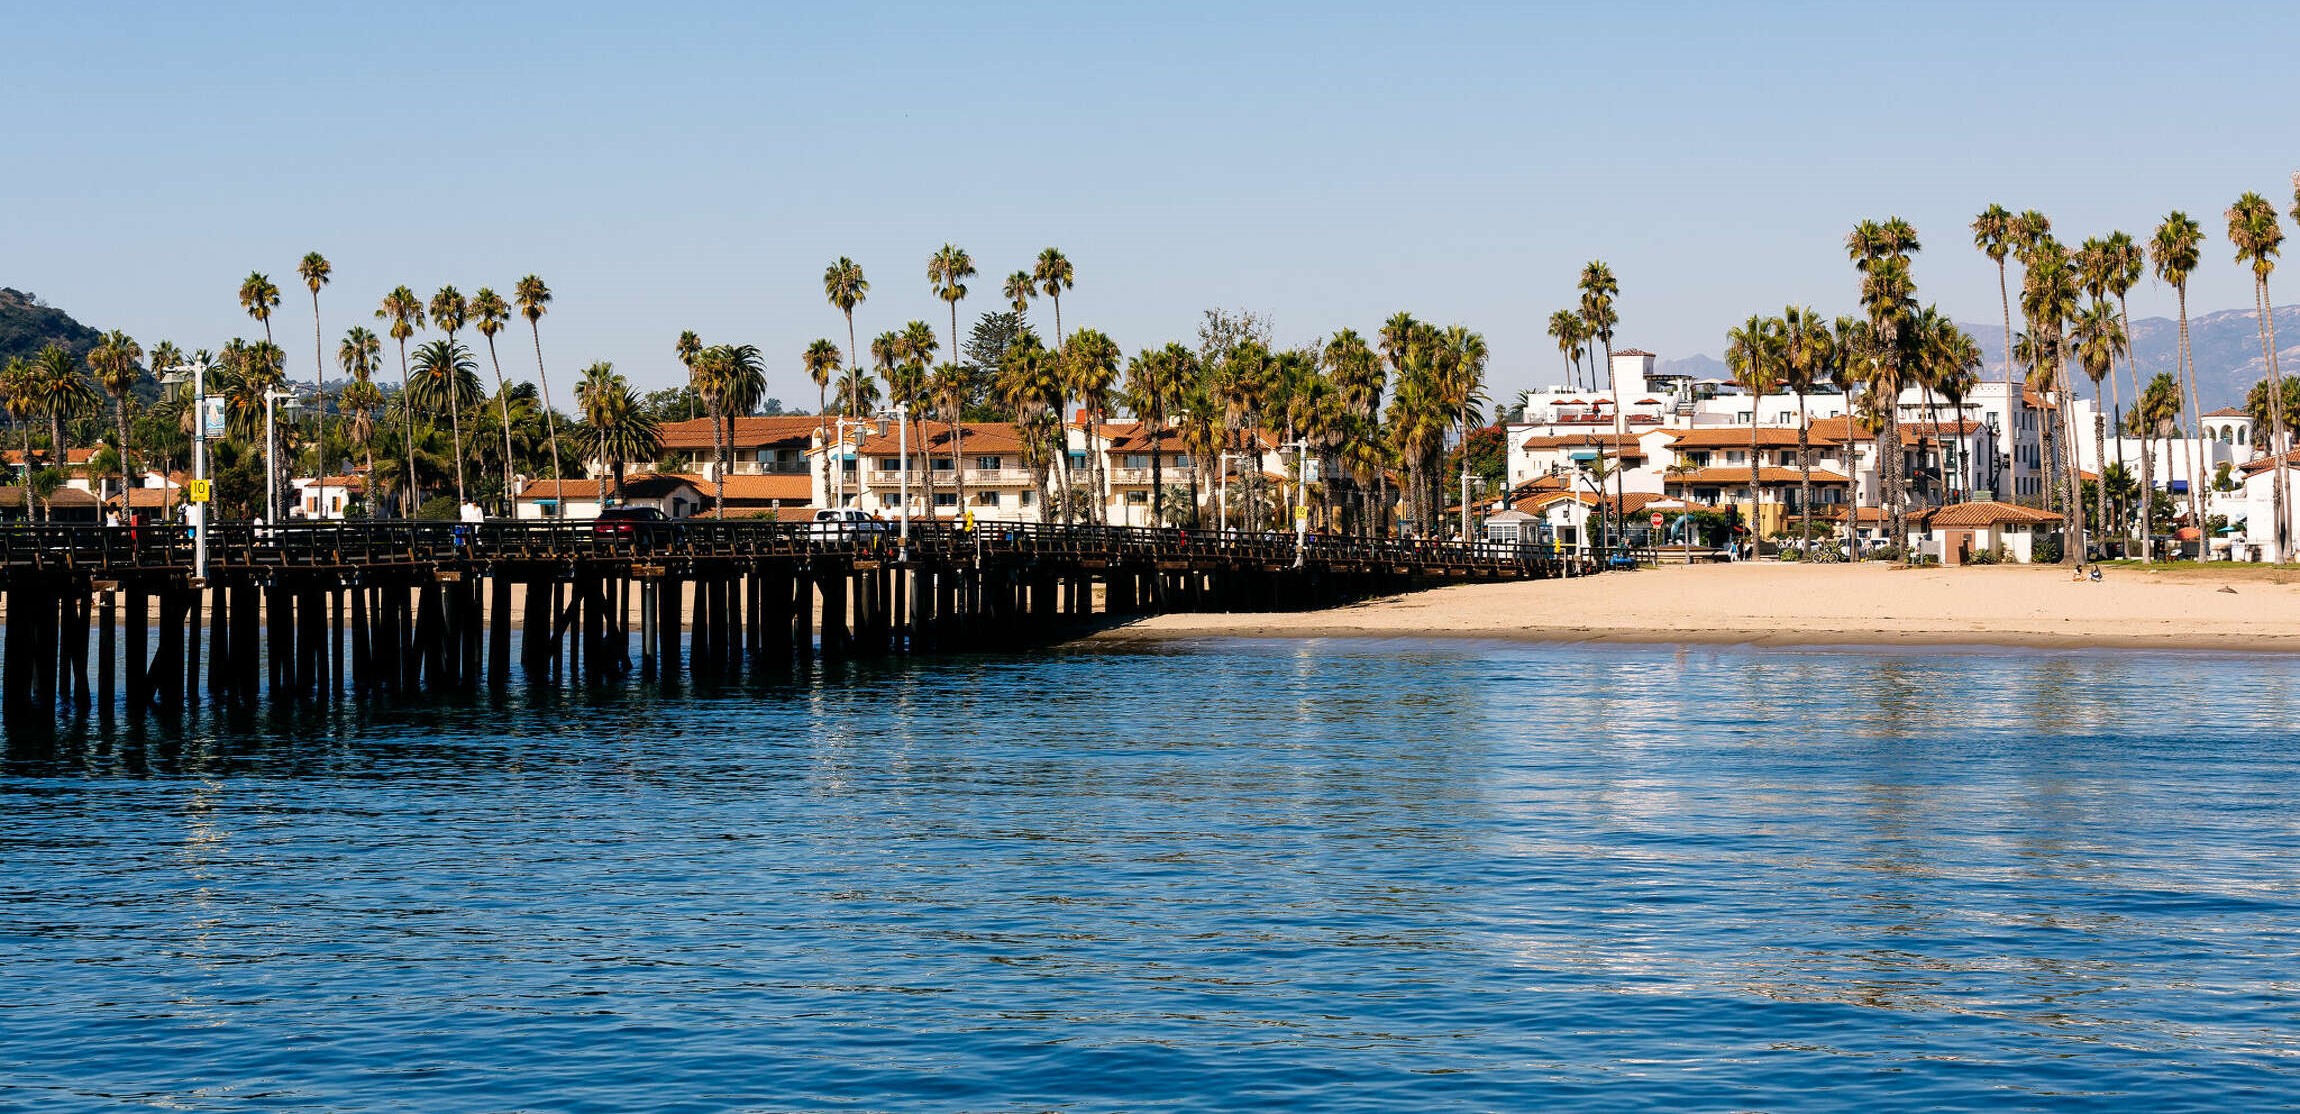 Santa Barbara Is Known as the American Riviera